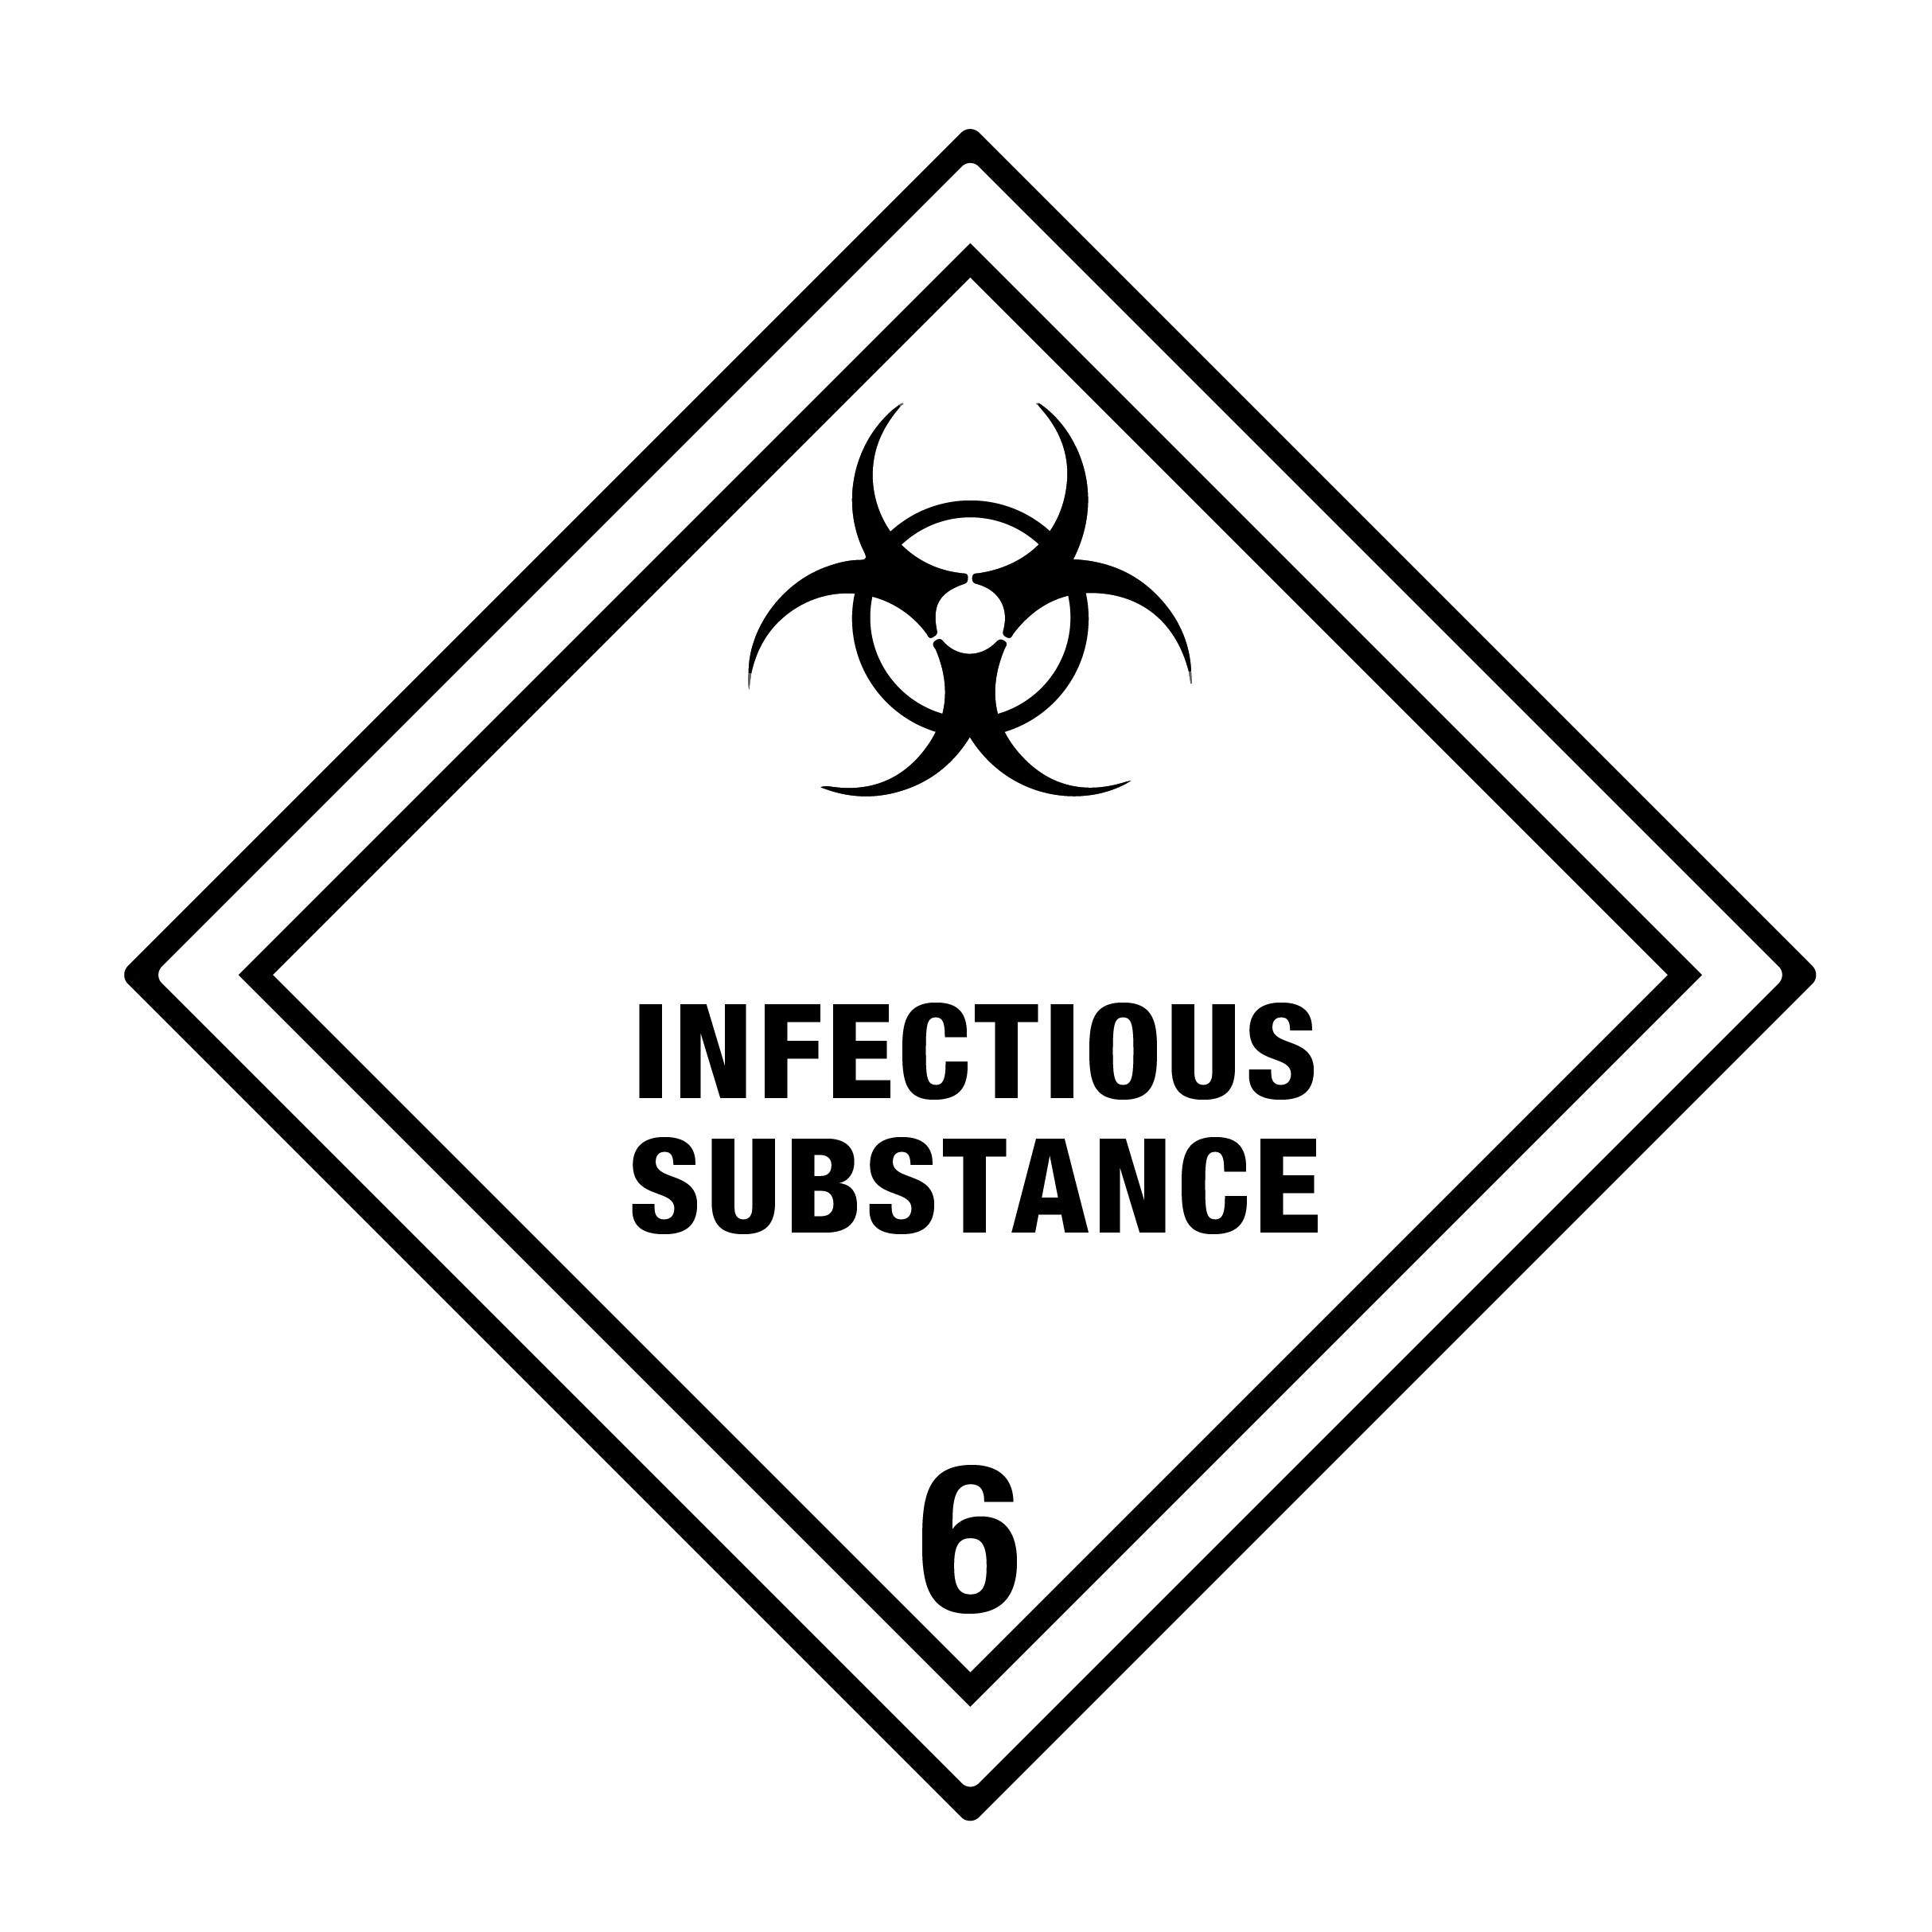 Gefahrzettel Kl. 6.2 Infectious Substance, 100x100mm, 1 Stk pro Blatt